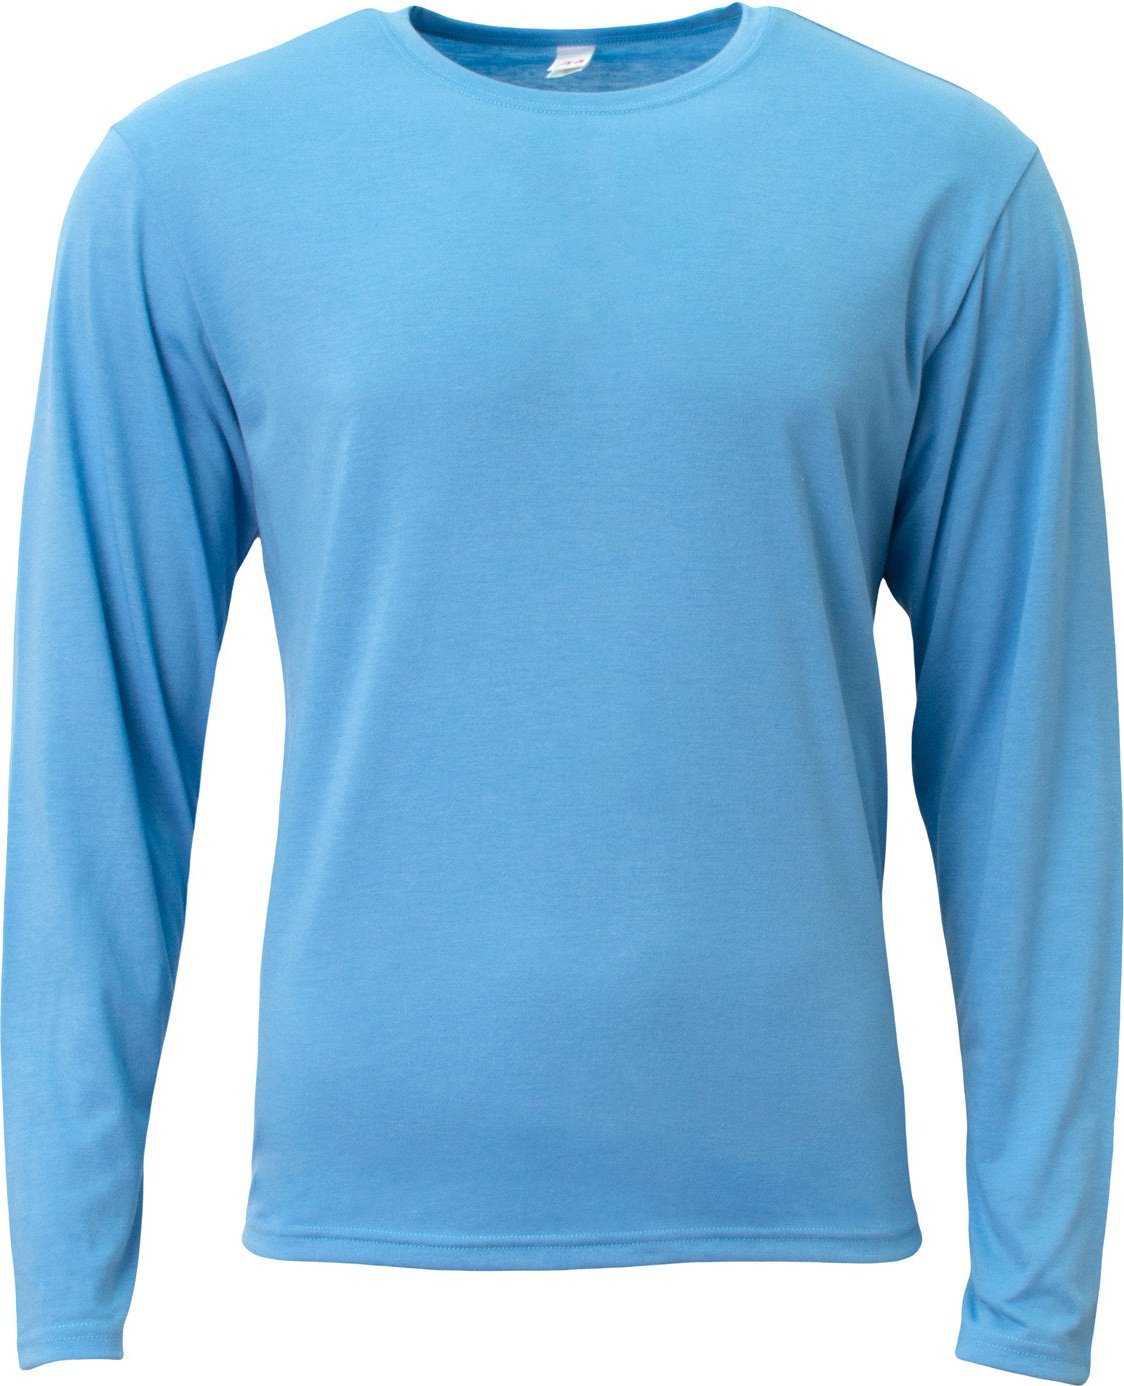 A4 NB3029 Youth Long Sleeve Softek T-Shirt - LIGHT BLUE - HIT a Double - 2